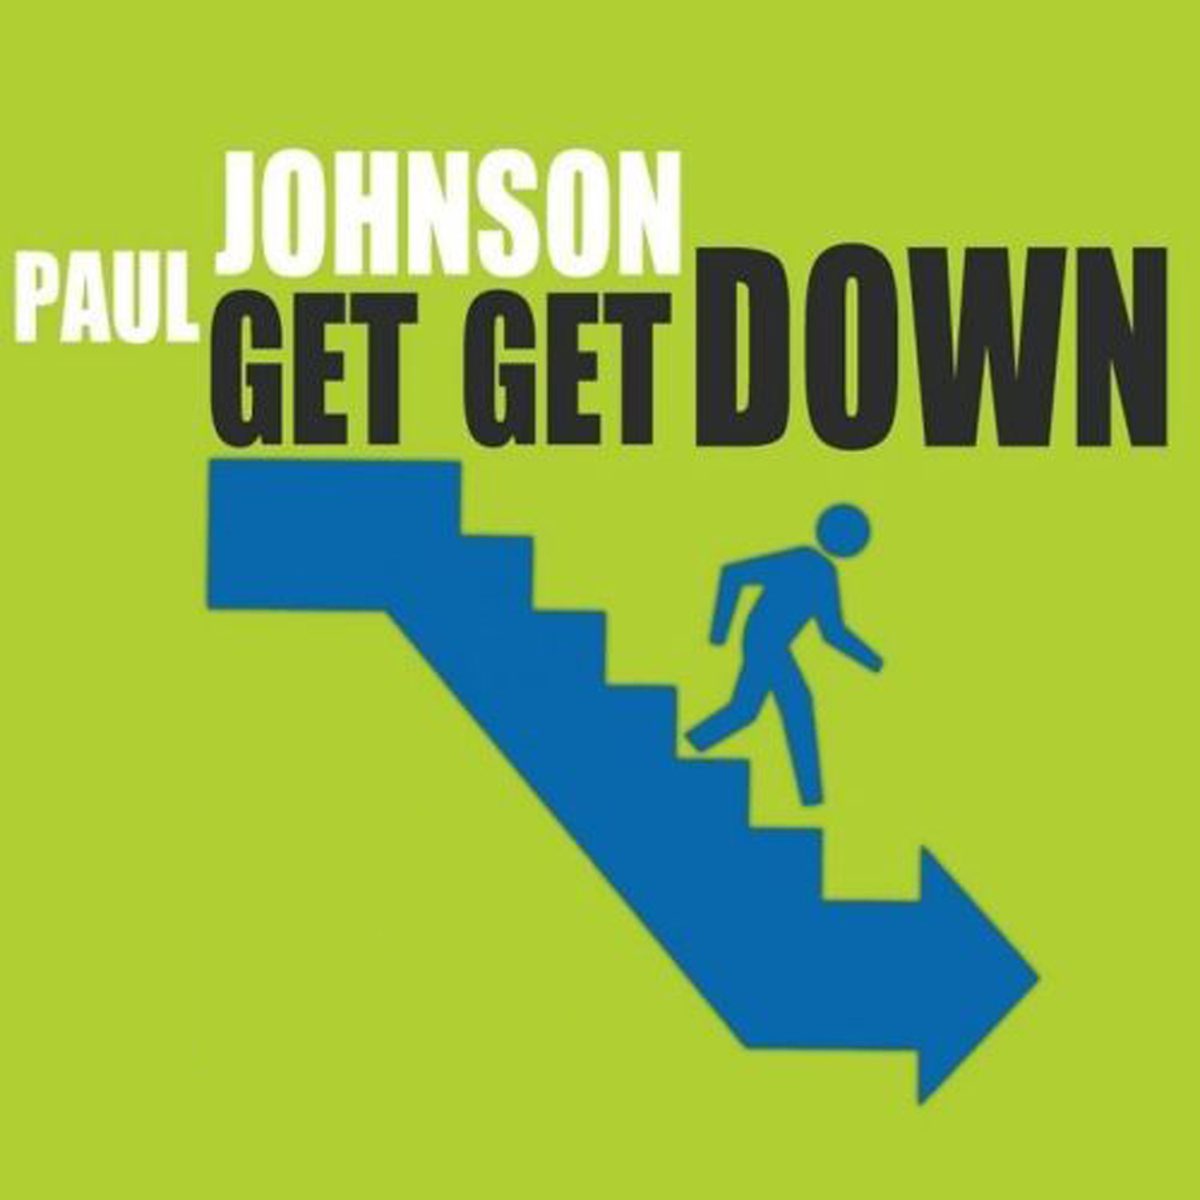 Get down текст. Paul Johnson get get down. Get get down пол Джонсон. Get get down DJ. Paul Johnson - get get down (Original Mix).mp3.